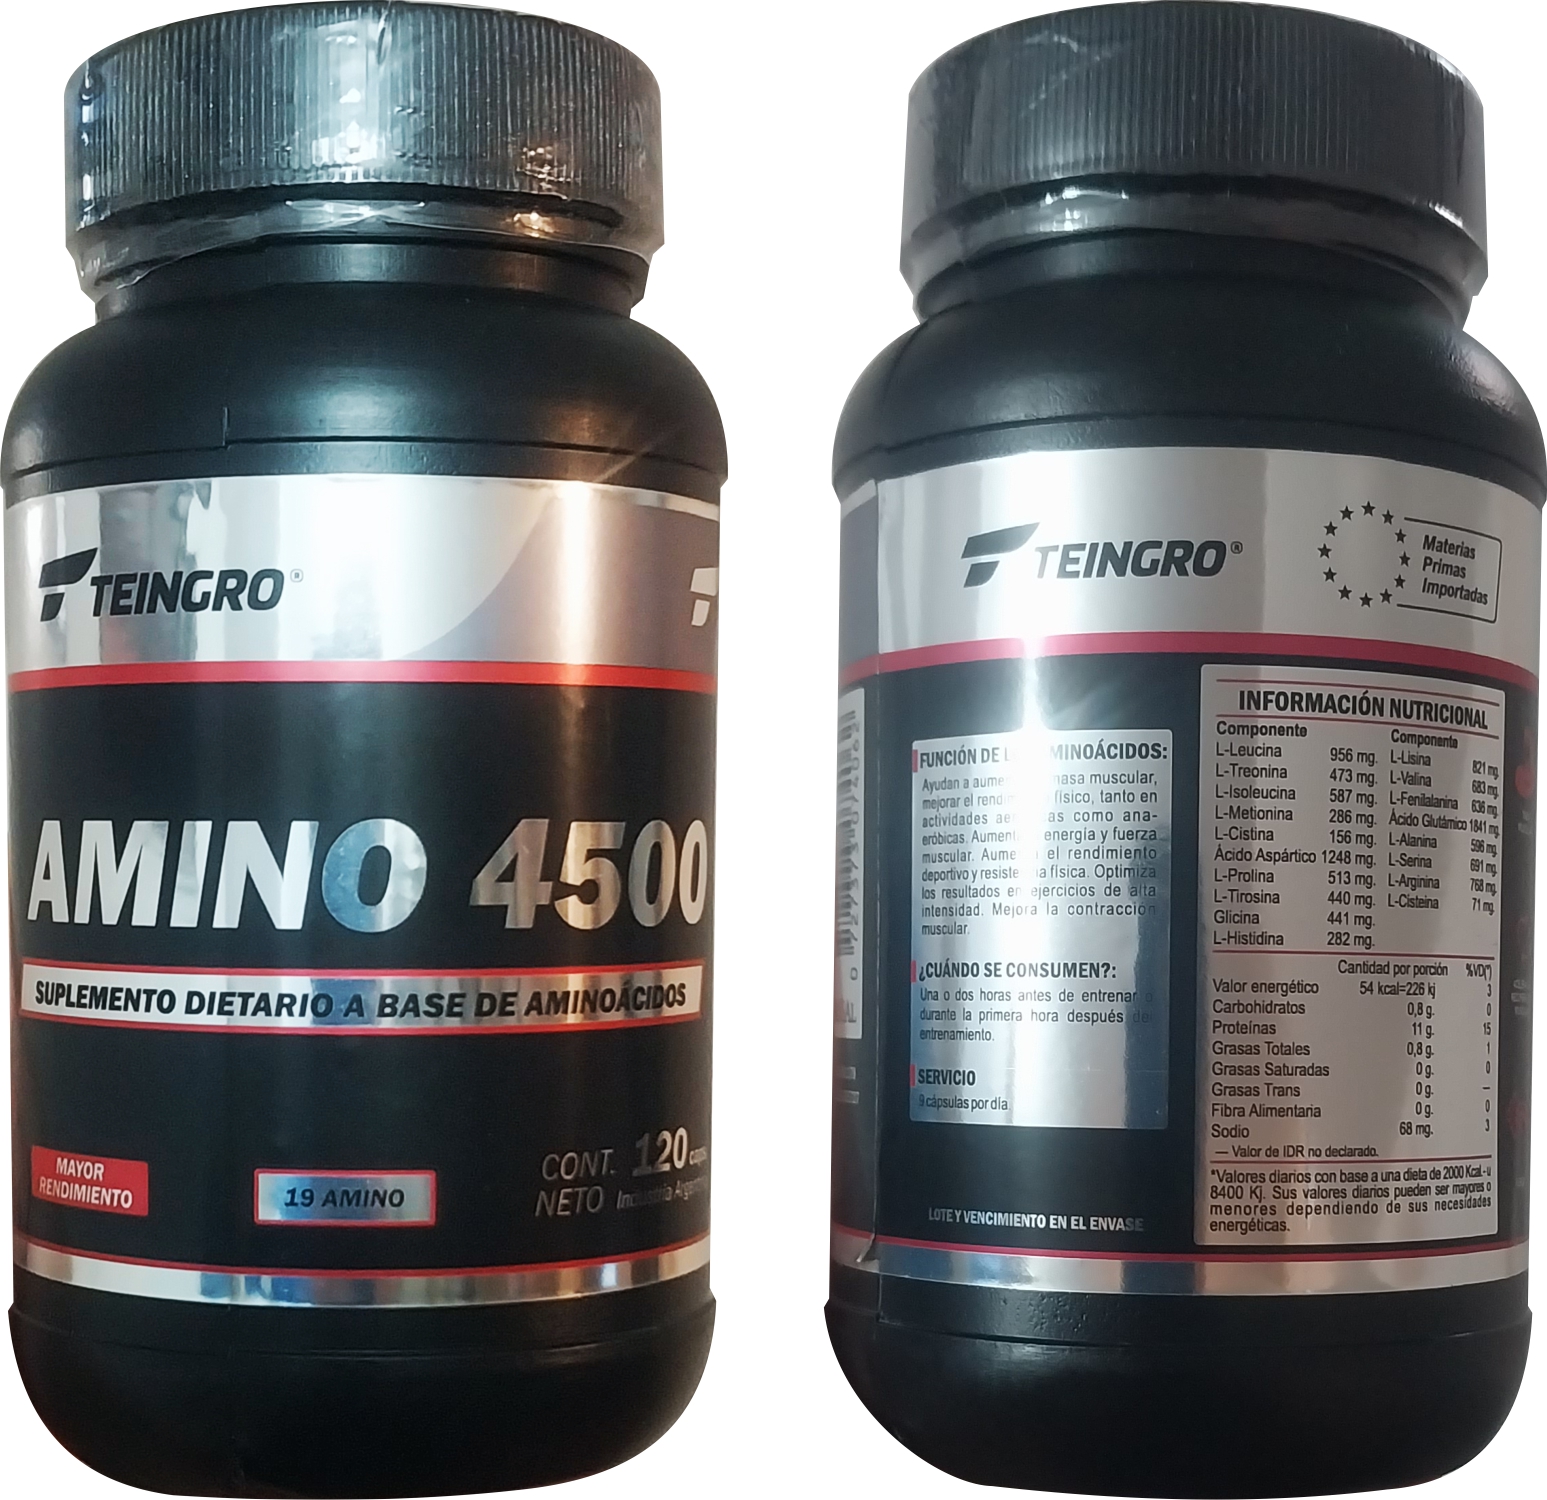 amino4500 image